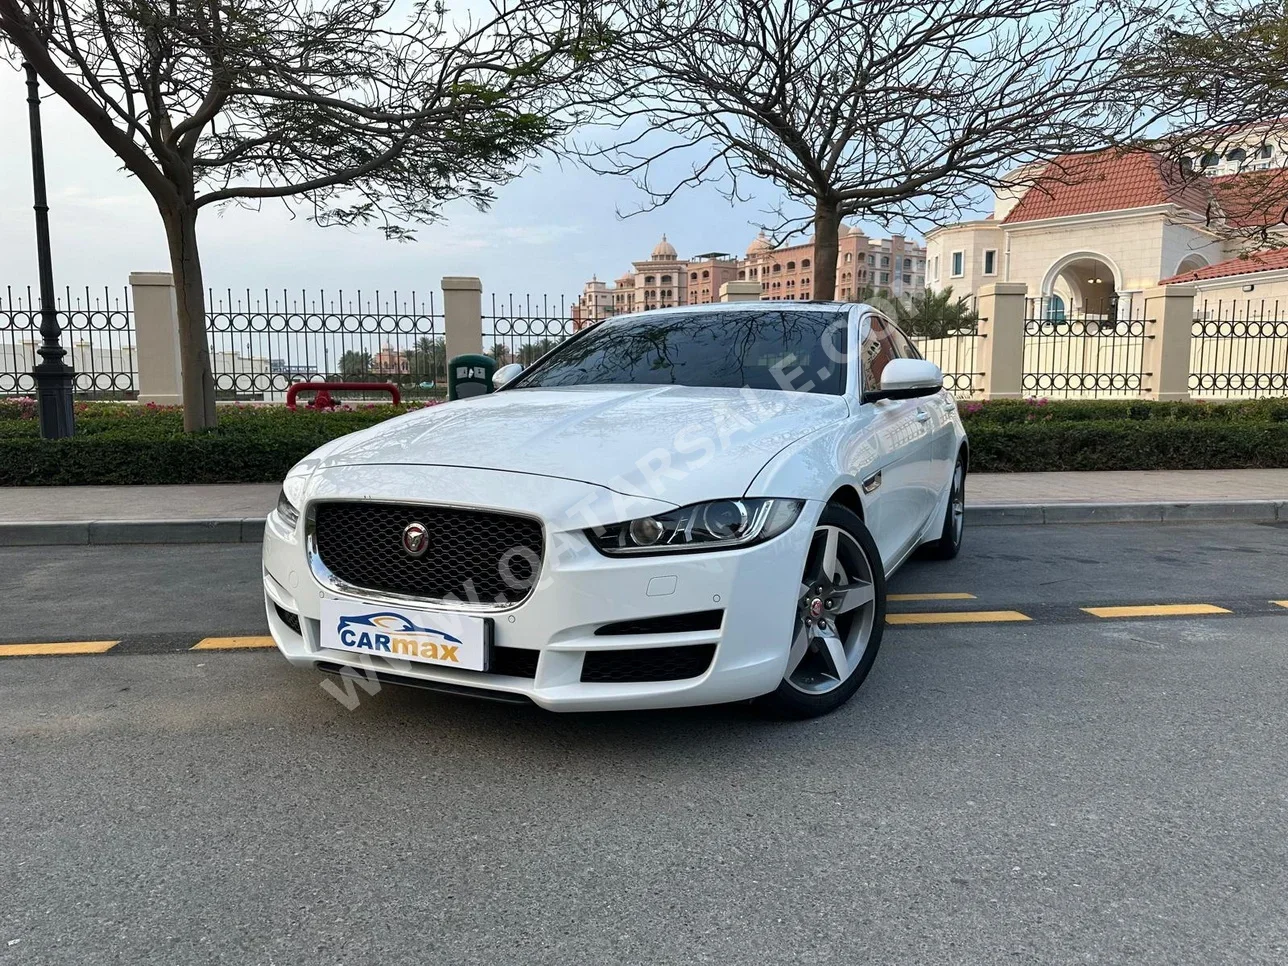 Jaguar  XE  Prestige  2019  Automatic  56,000 Km  4 Cylinder  Rear Wheel Drive (RWD)  Sedan  White  With Warranty